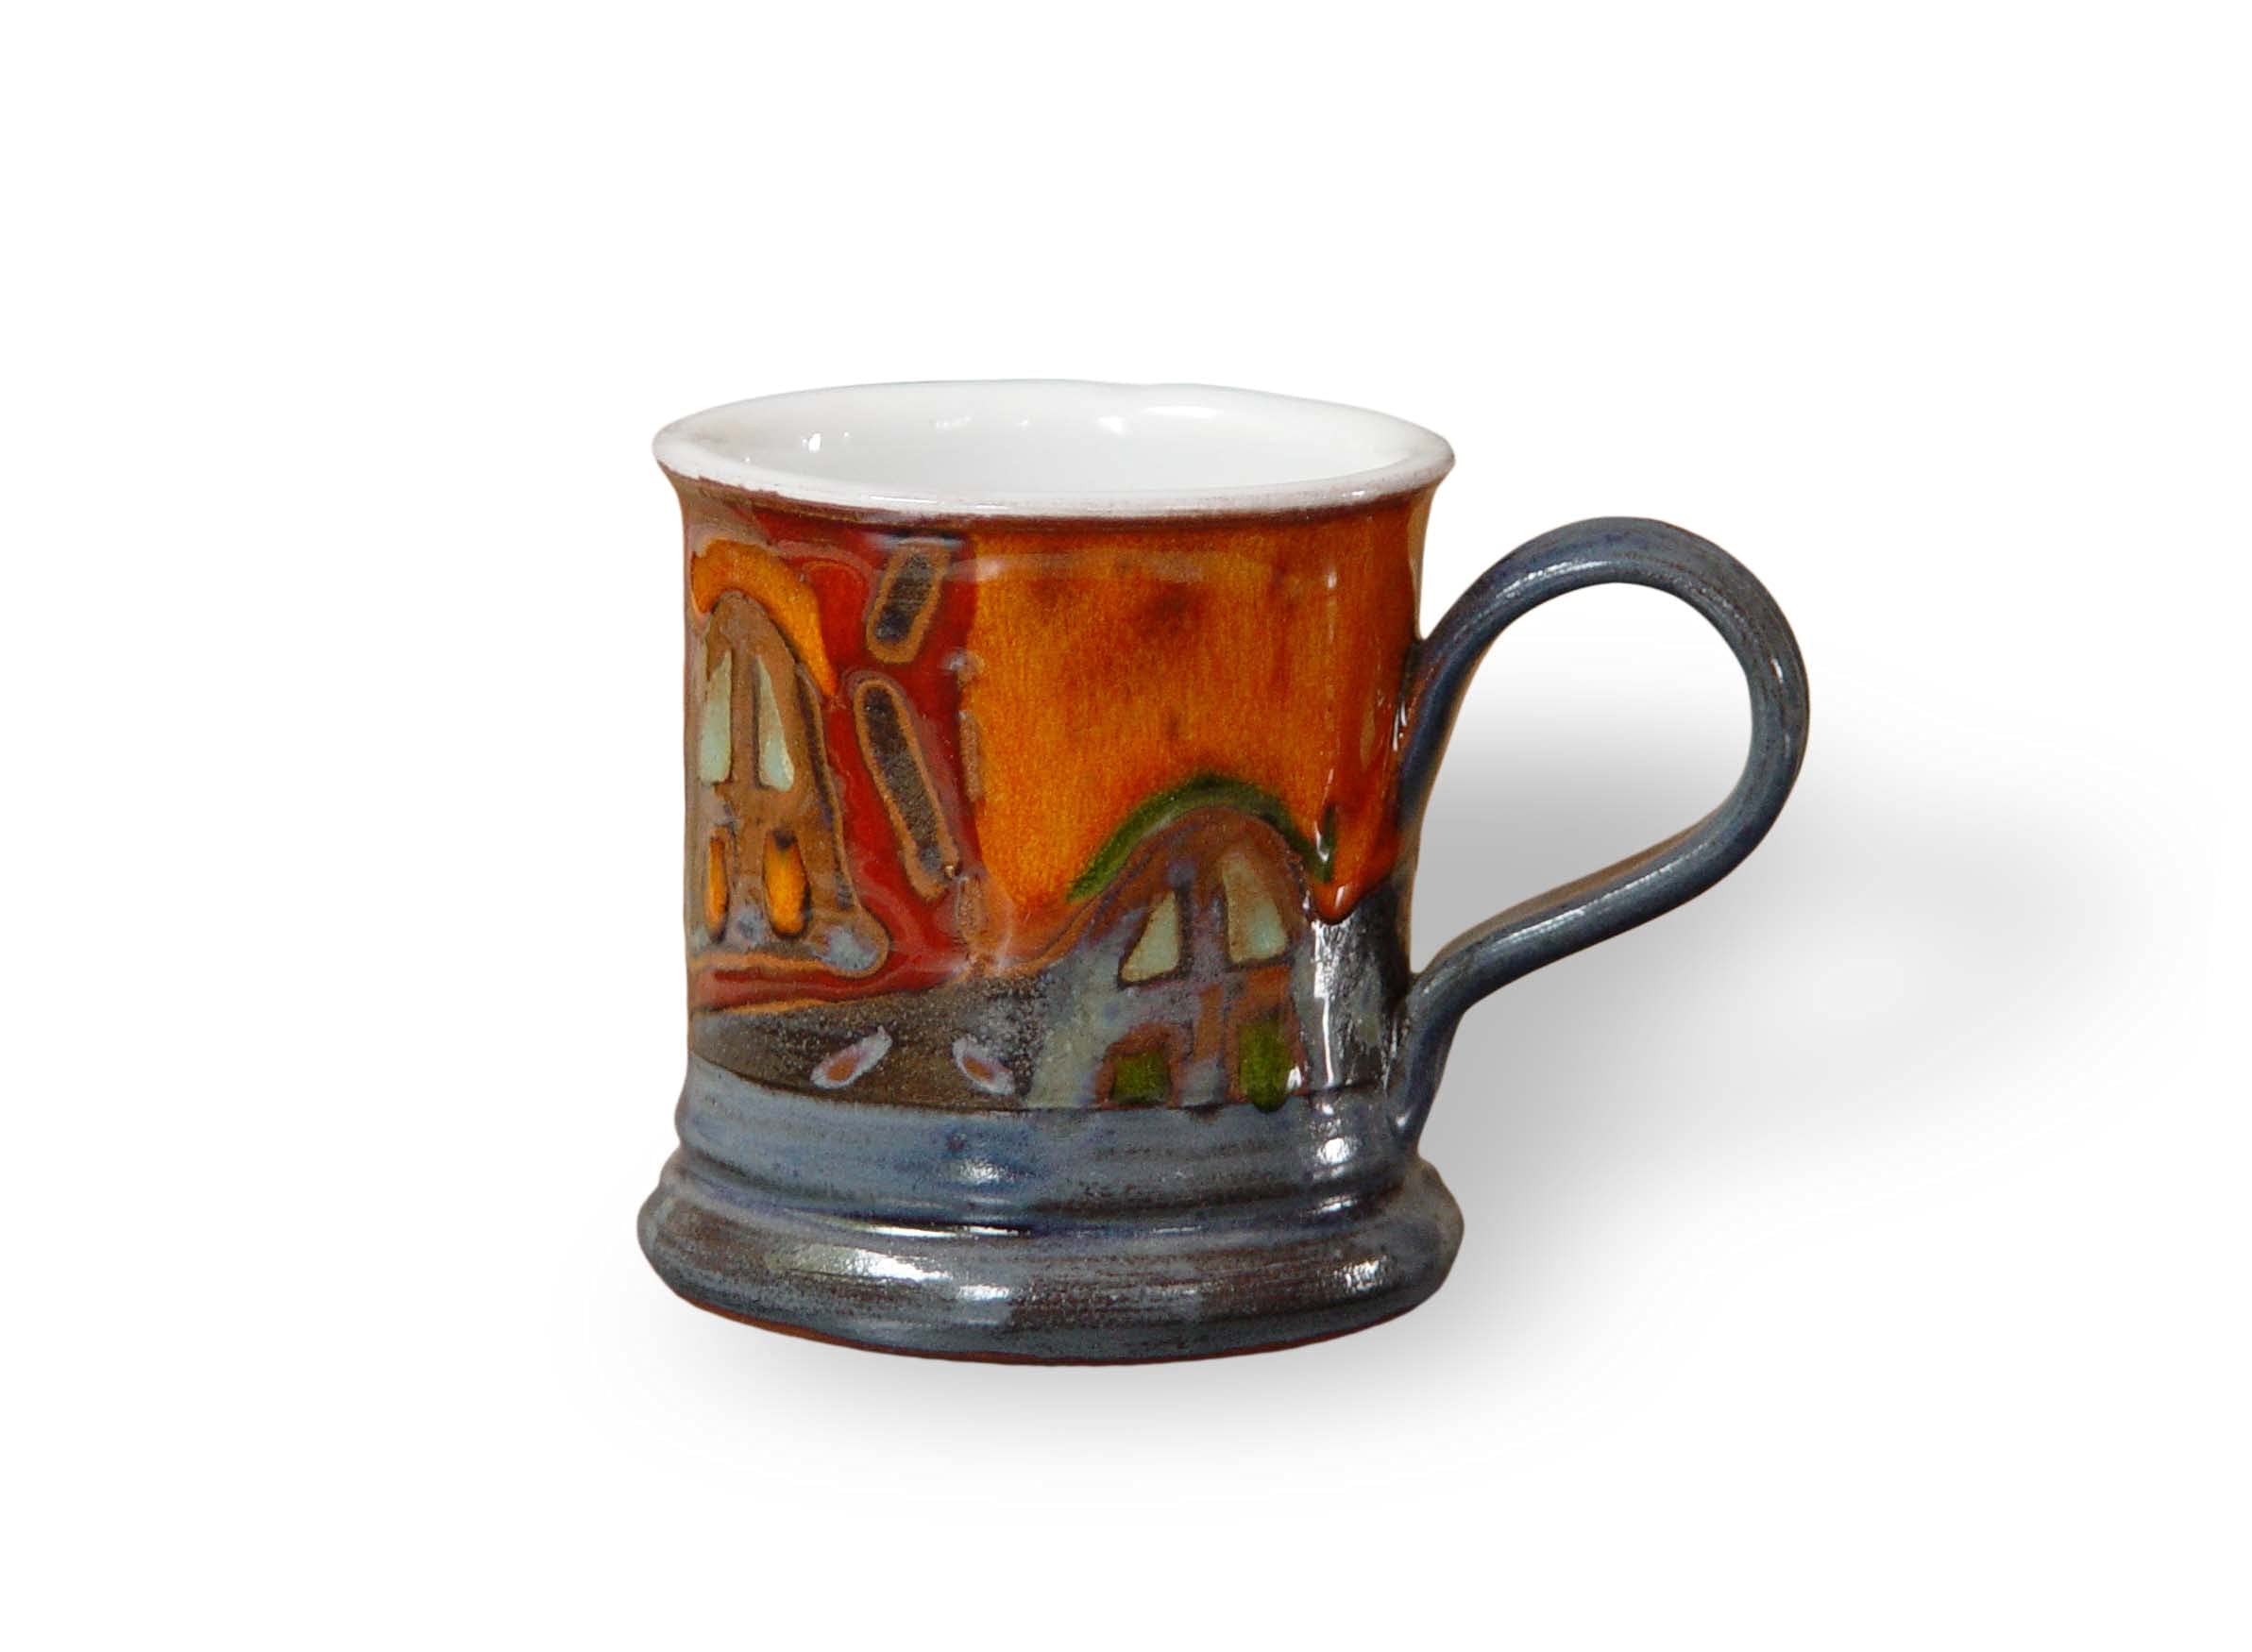 Coffee Mug - Handmade Colorful Ceramic Mug - Espresso Cup - Demitasse Cup - Teacup - Ceramics and Pottery - Danko Pottery